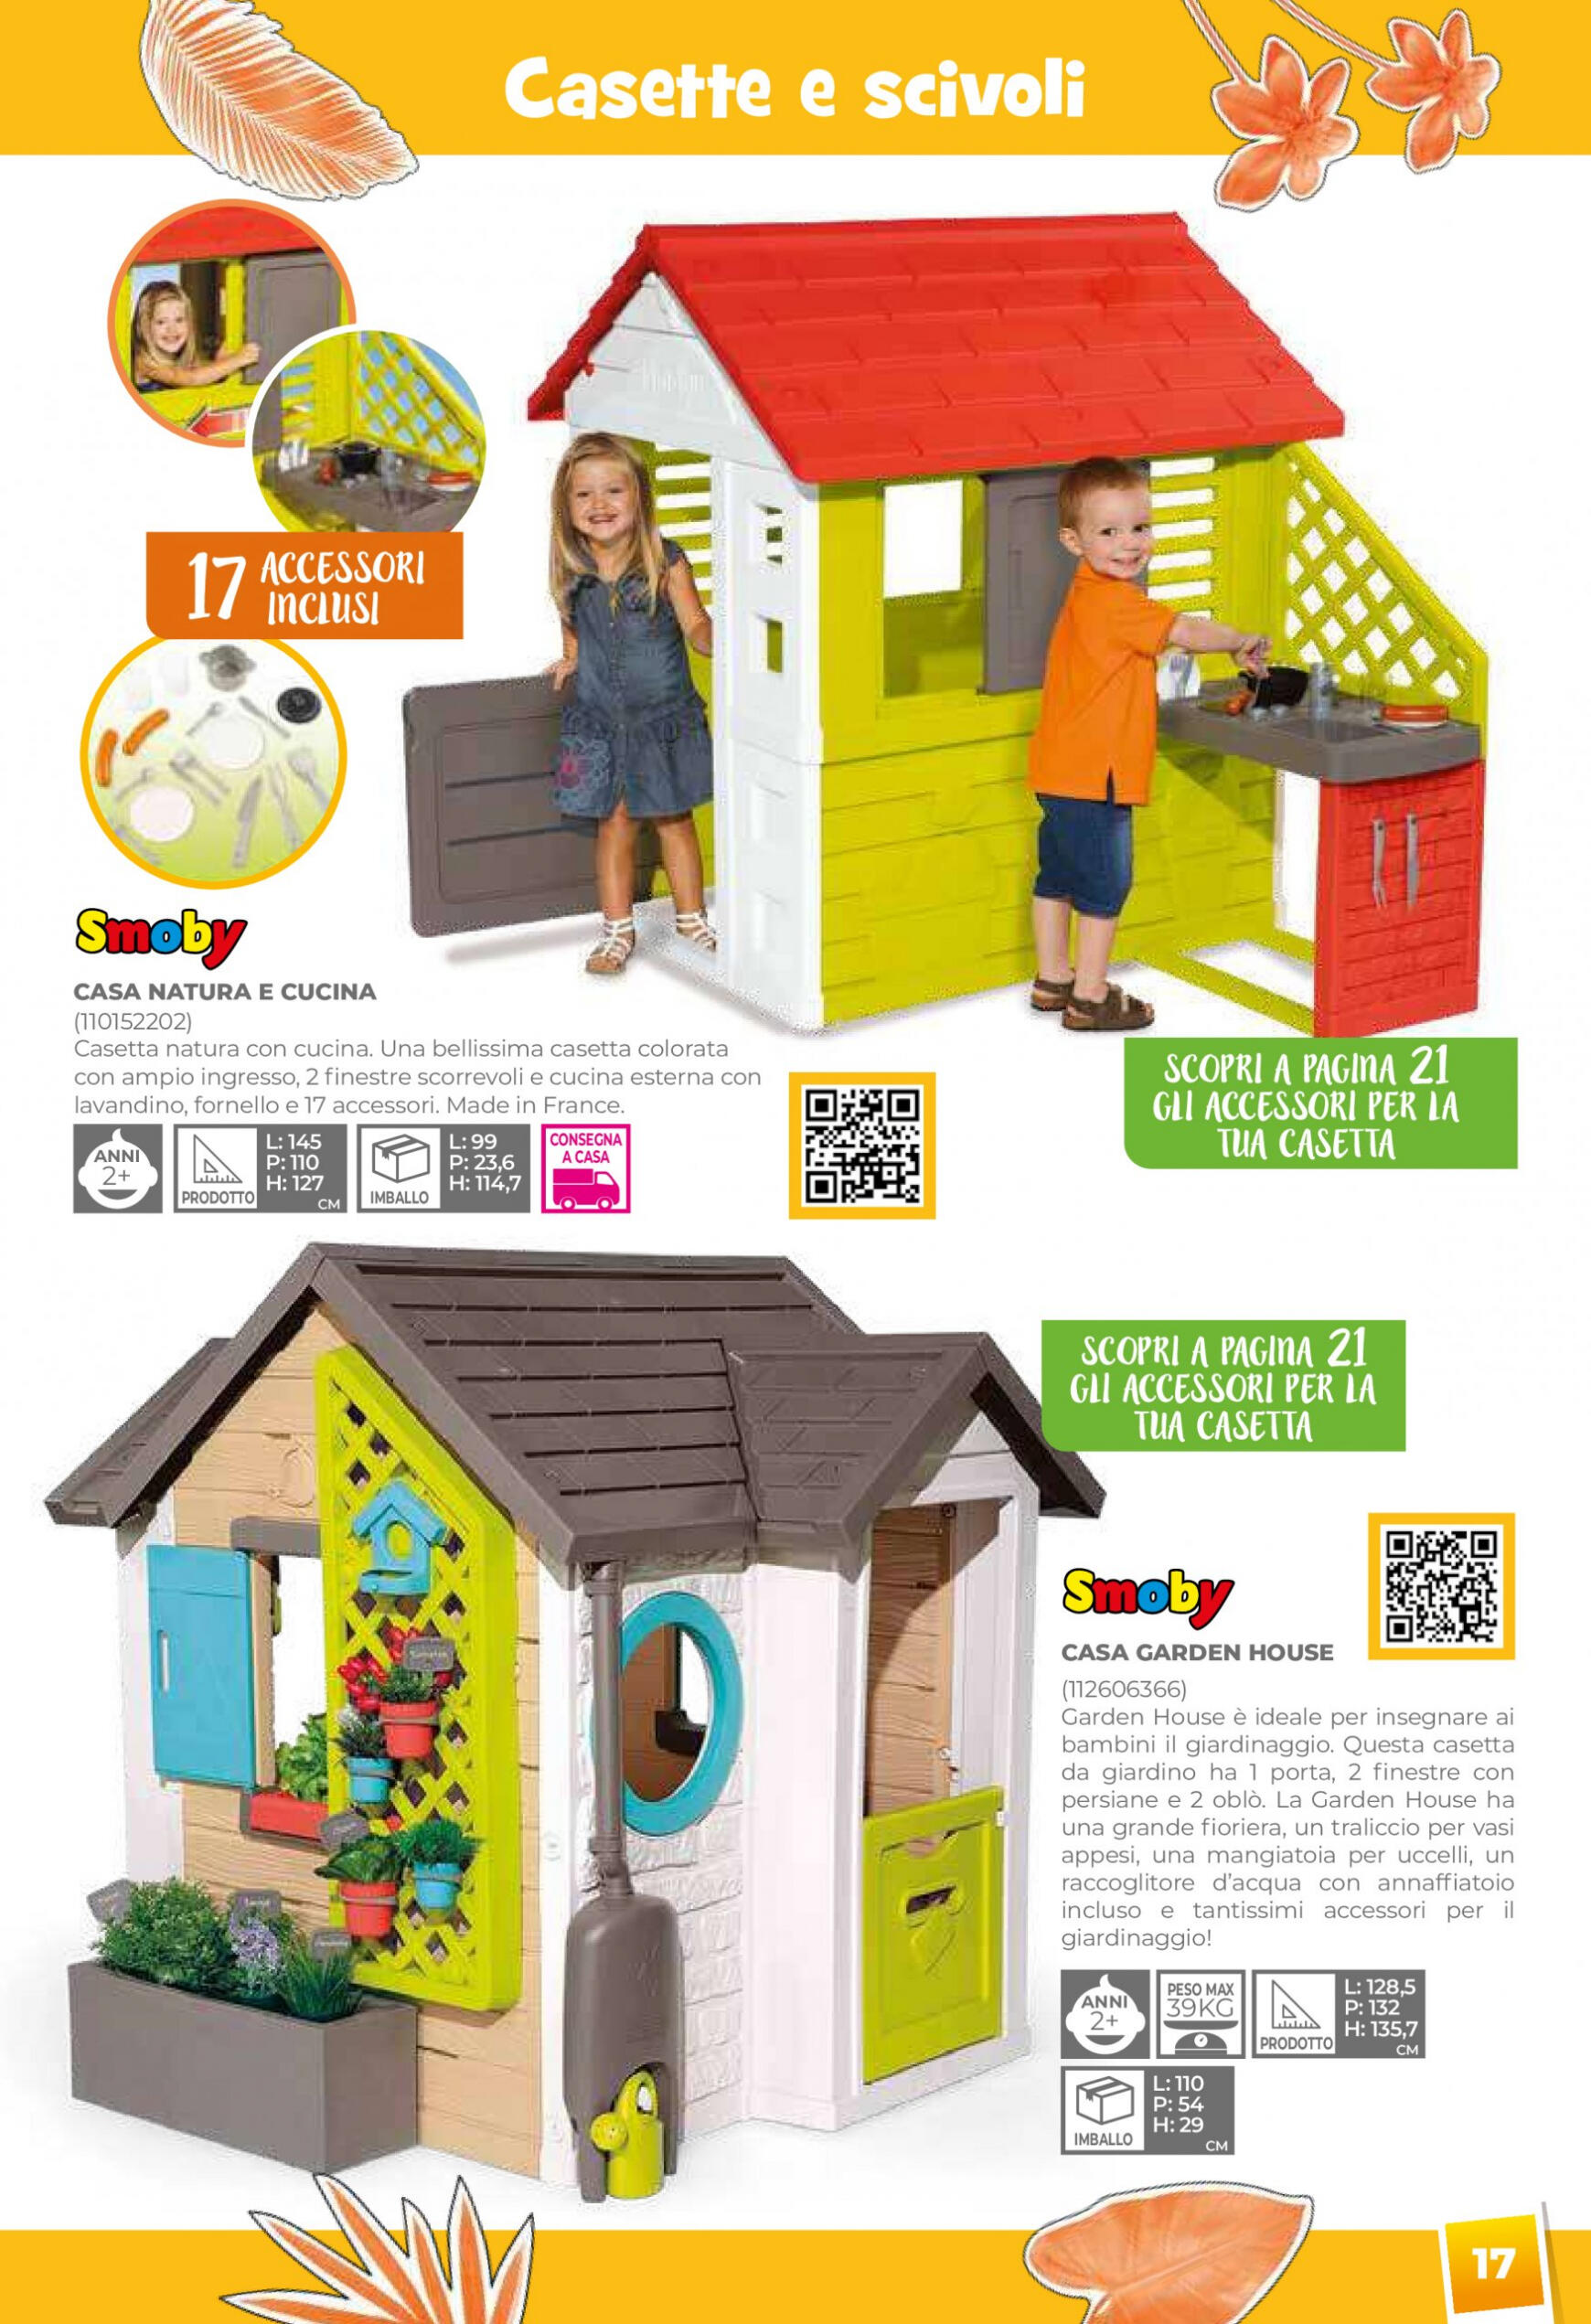 toys-center - Nuovo volantino Toys Center 01.05. - 31.12. - page: 19